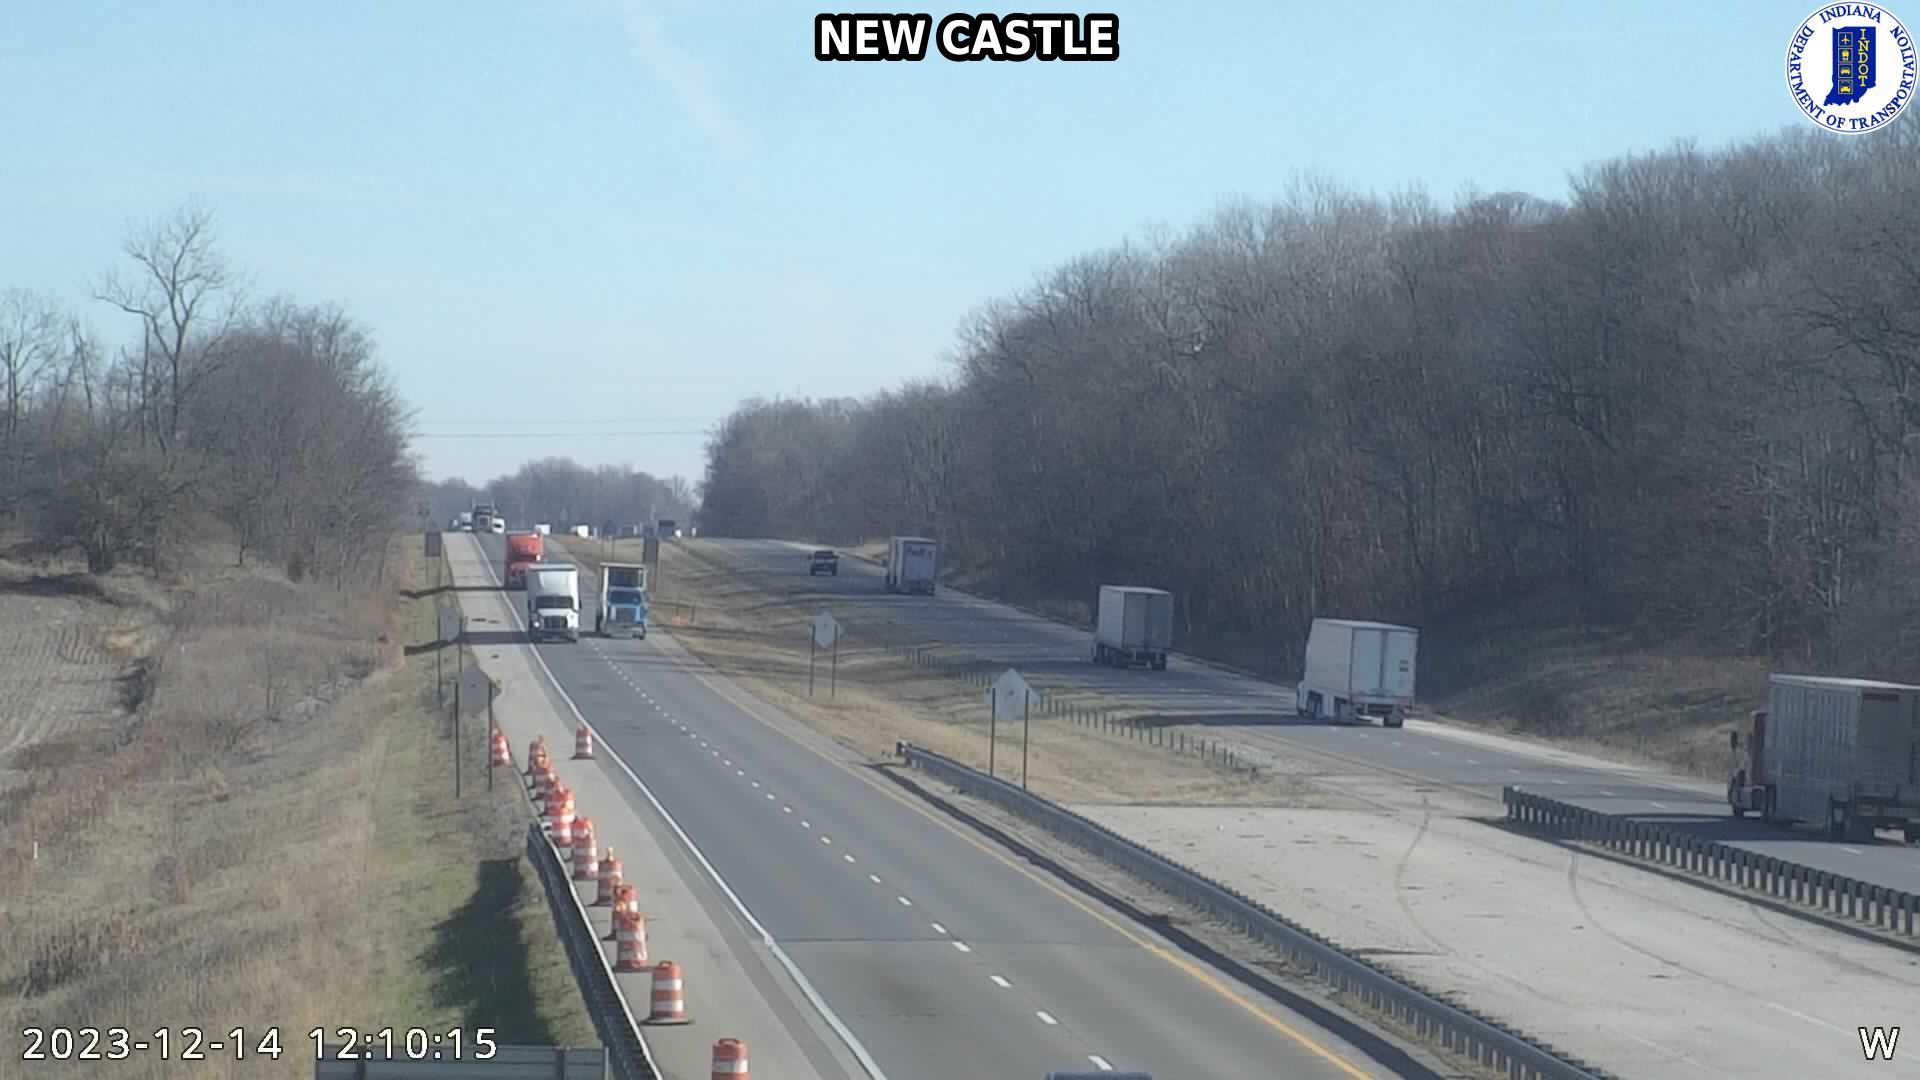 Lewisville: I-70: NEW CASTLE Traffic Camera